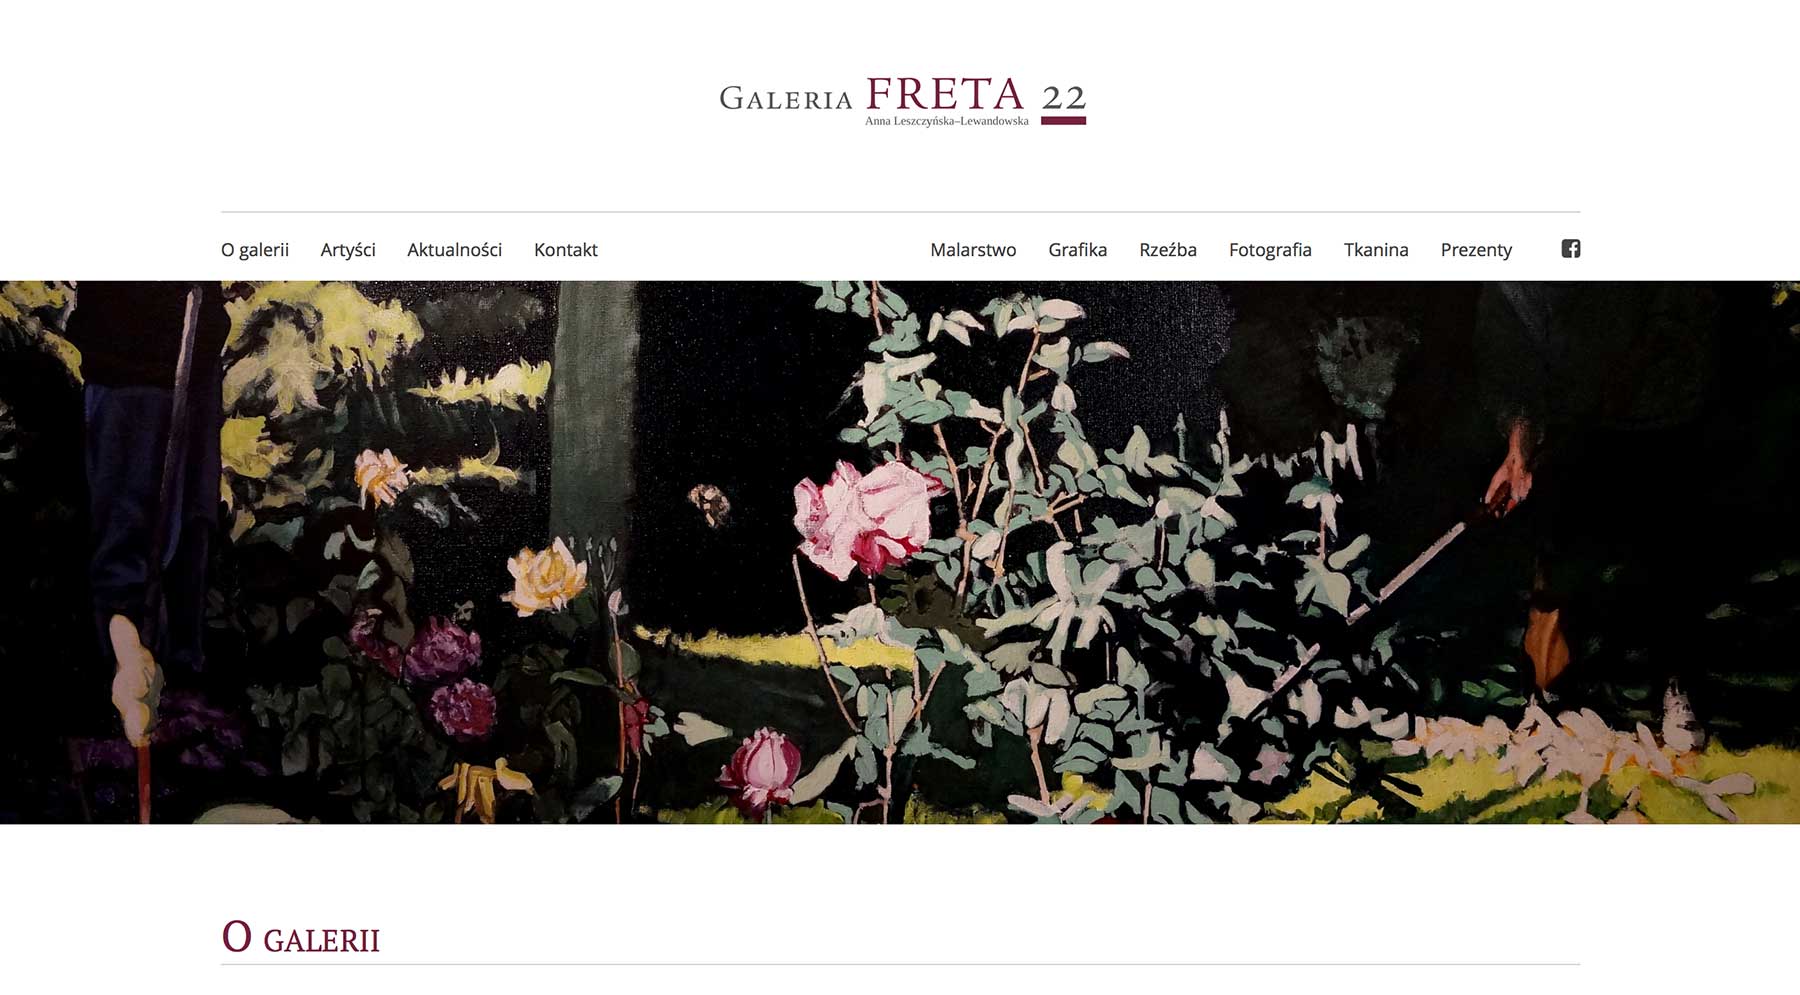 Freta 22 Gallery